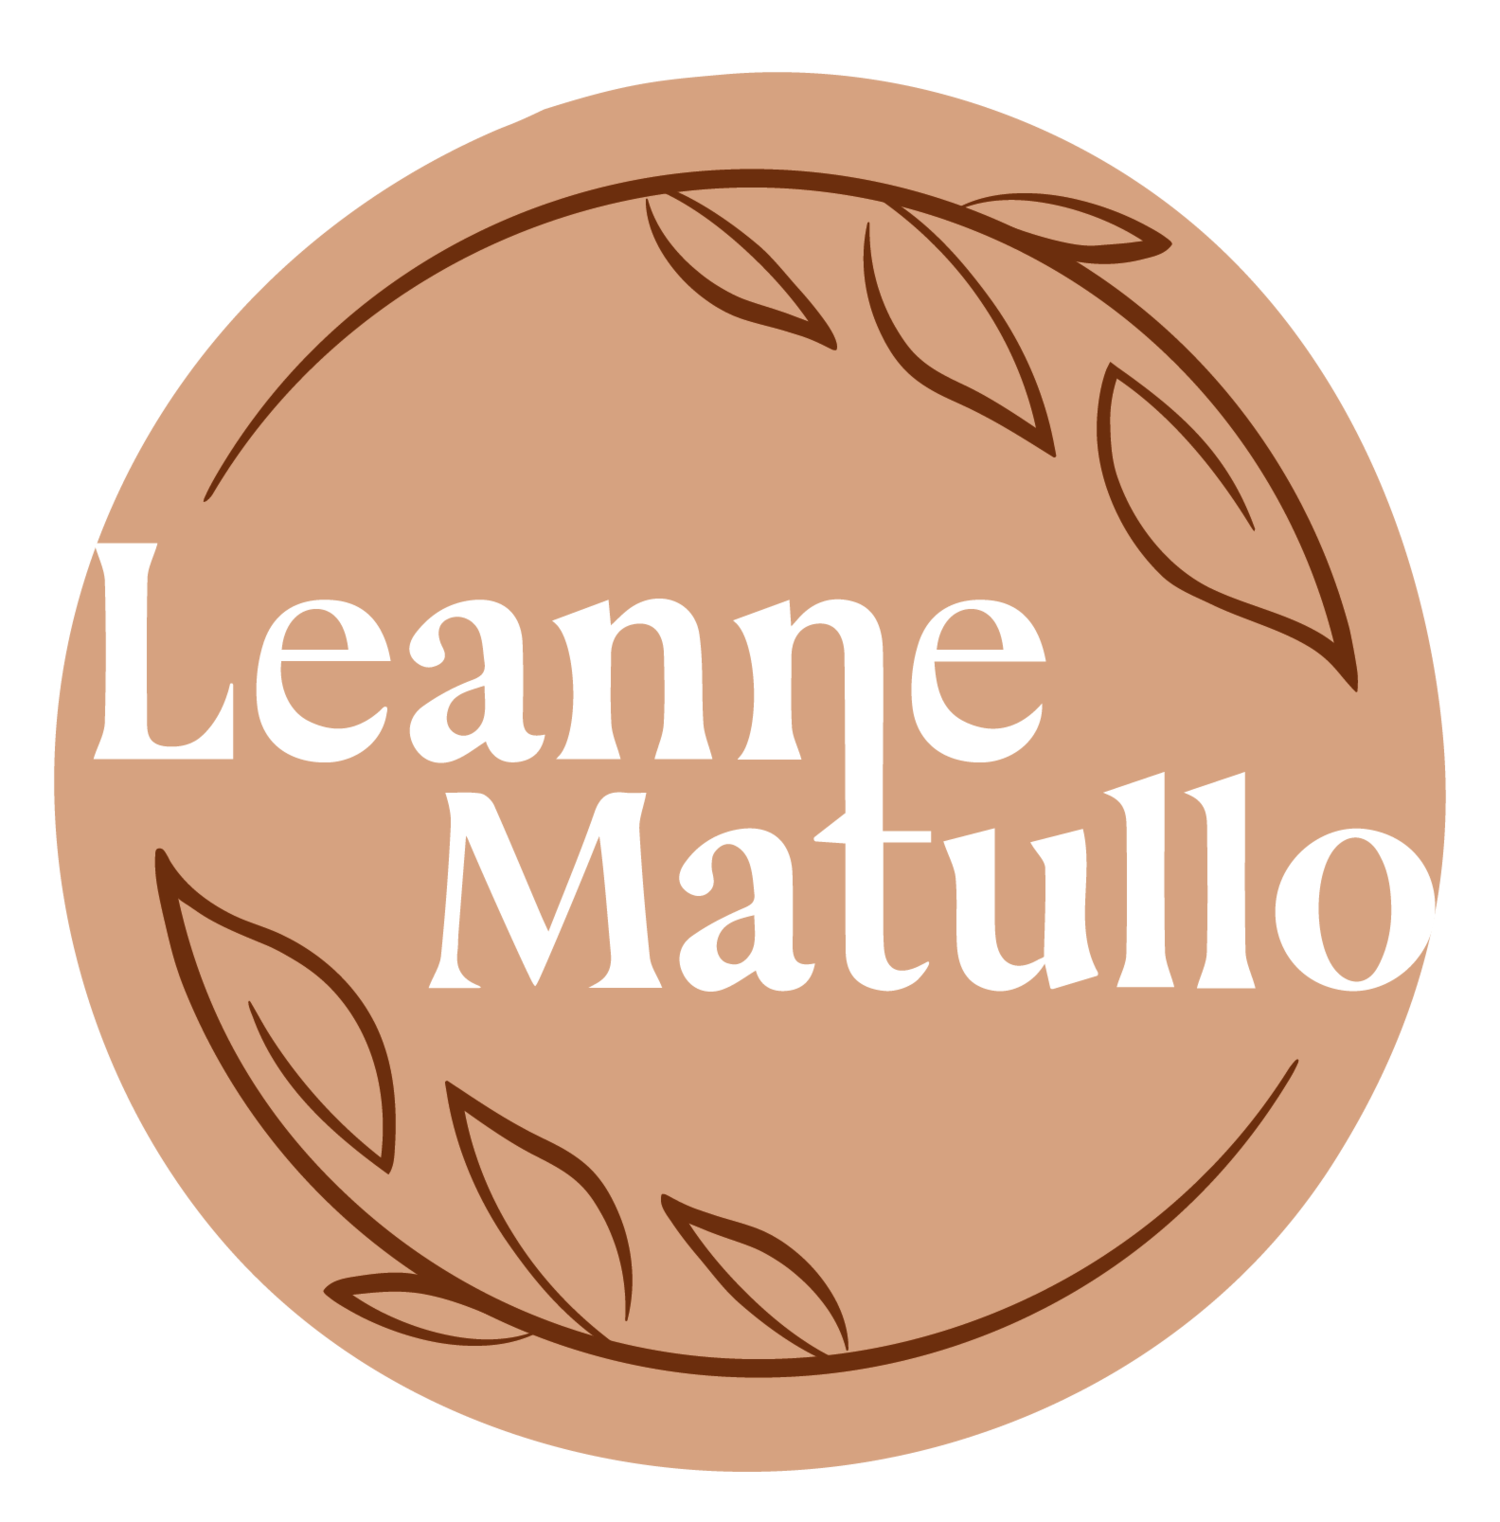 Leanne Matullo